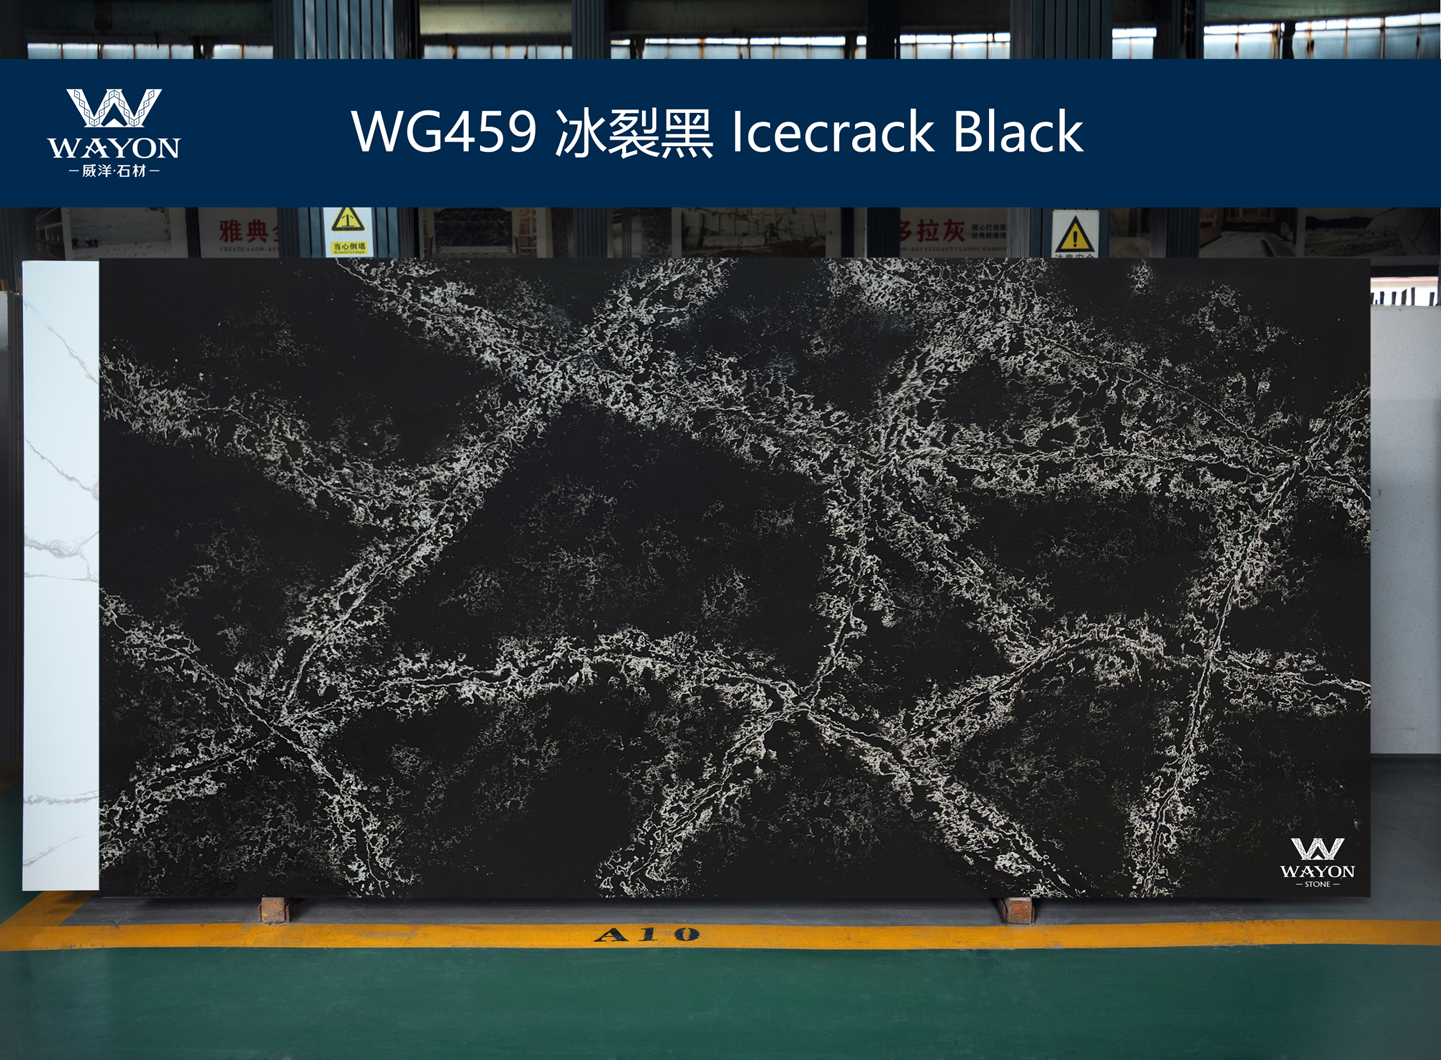 WG459 Icecrack Black